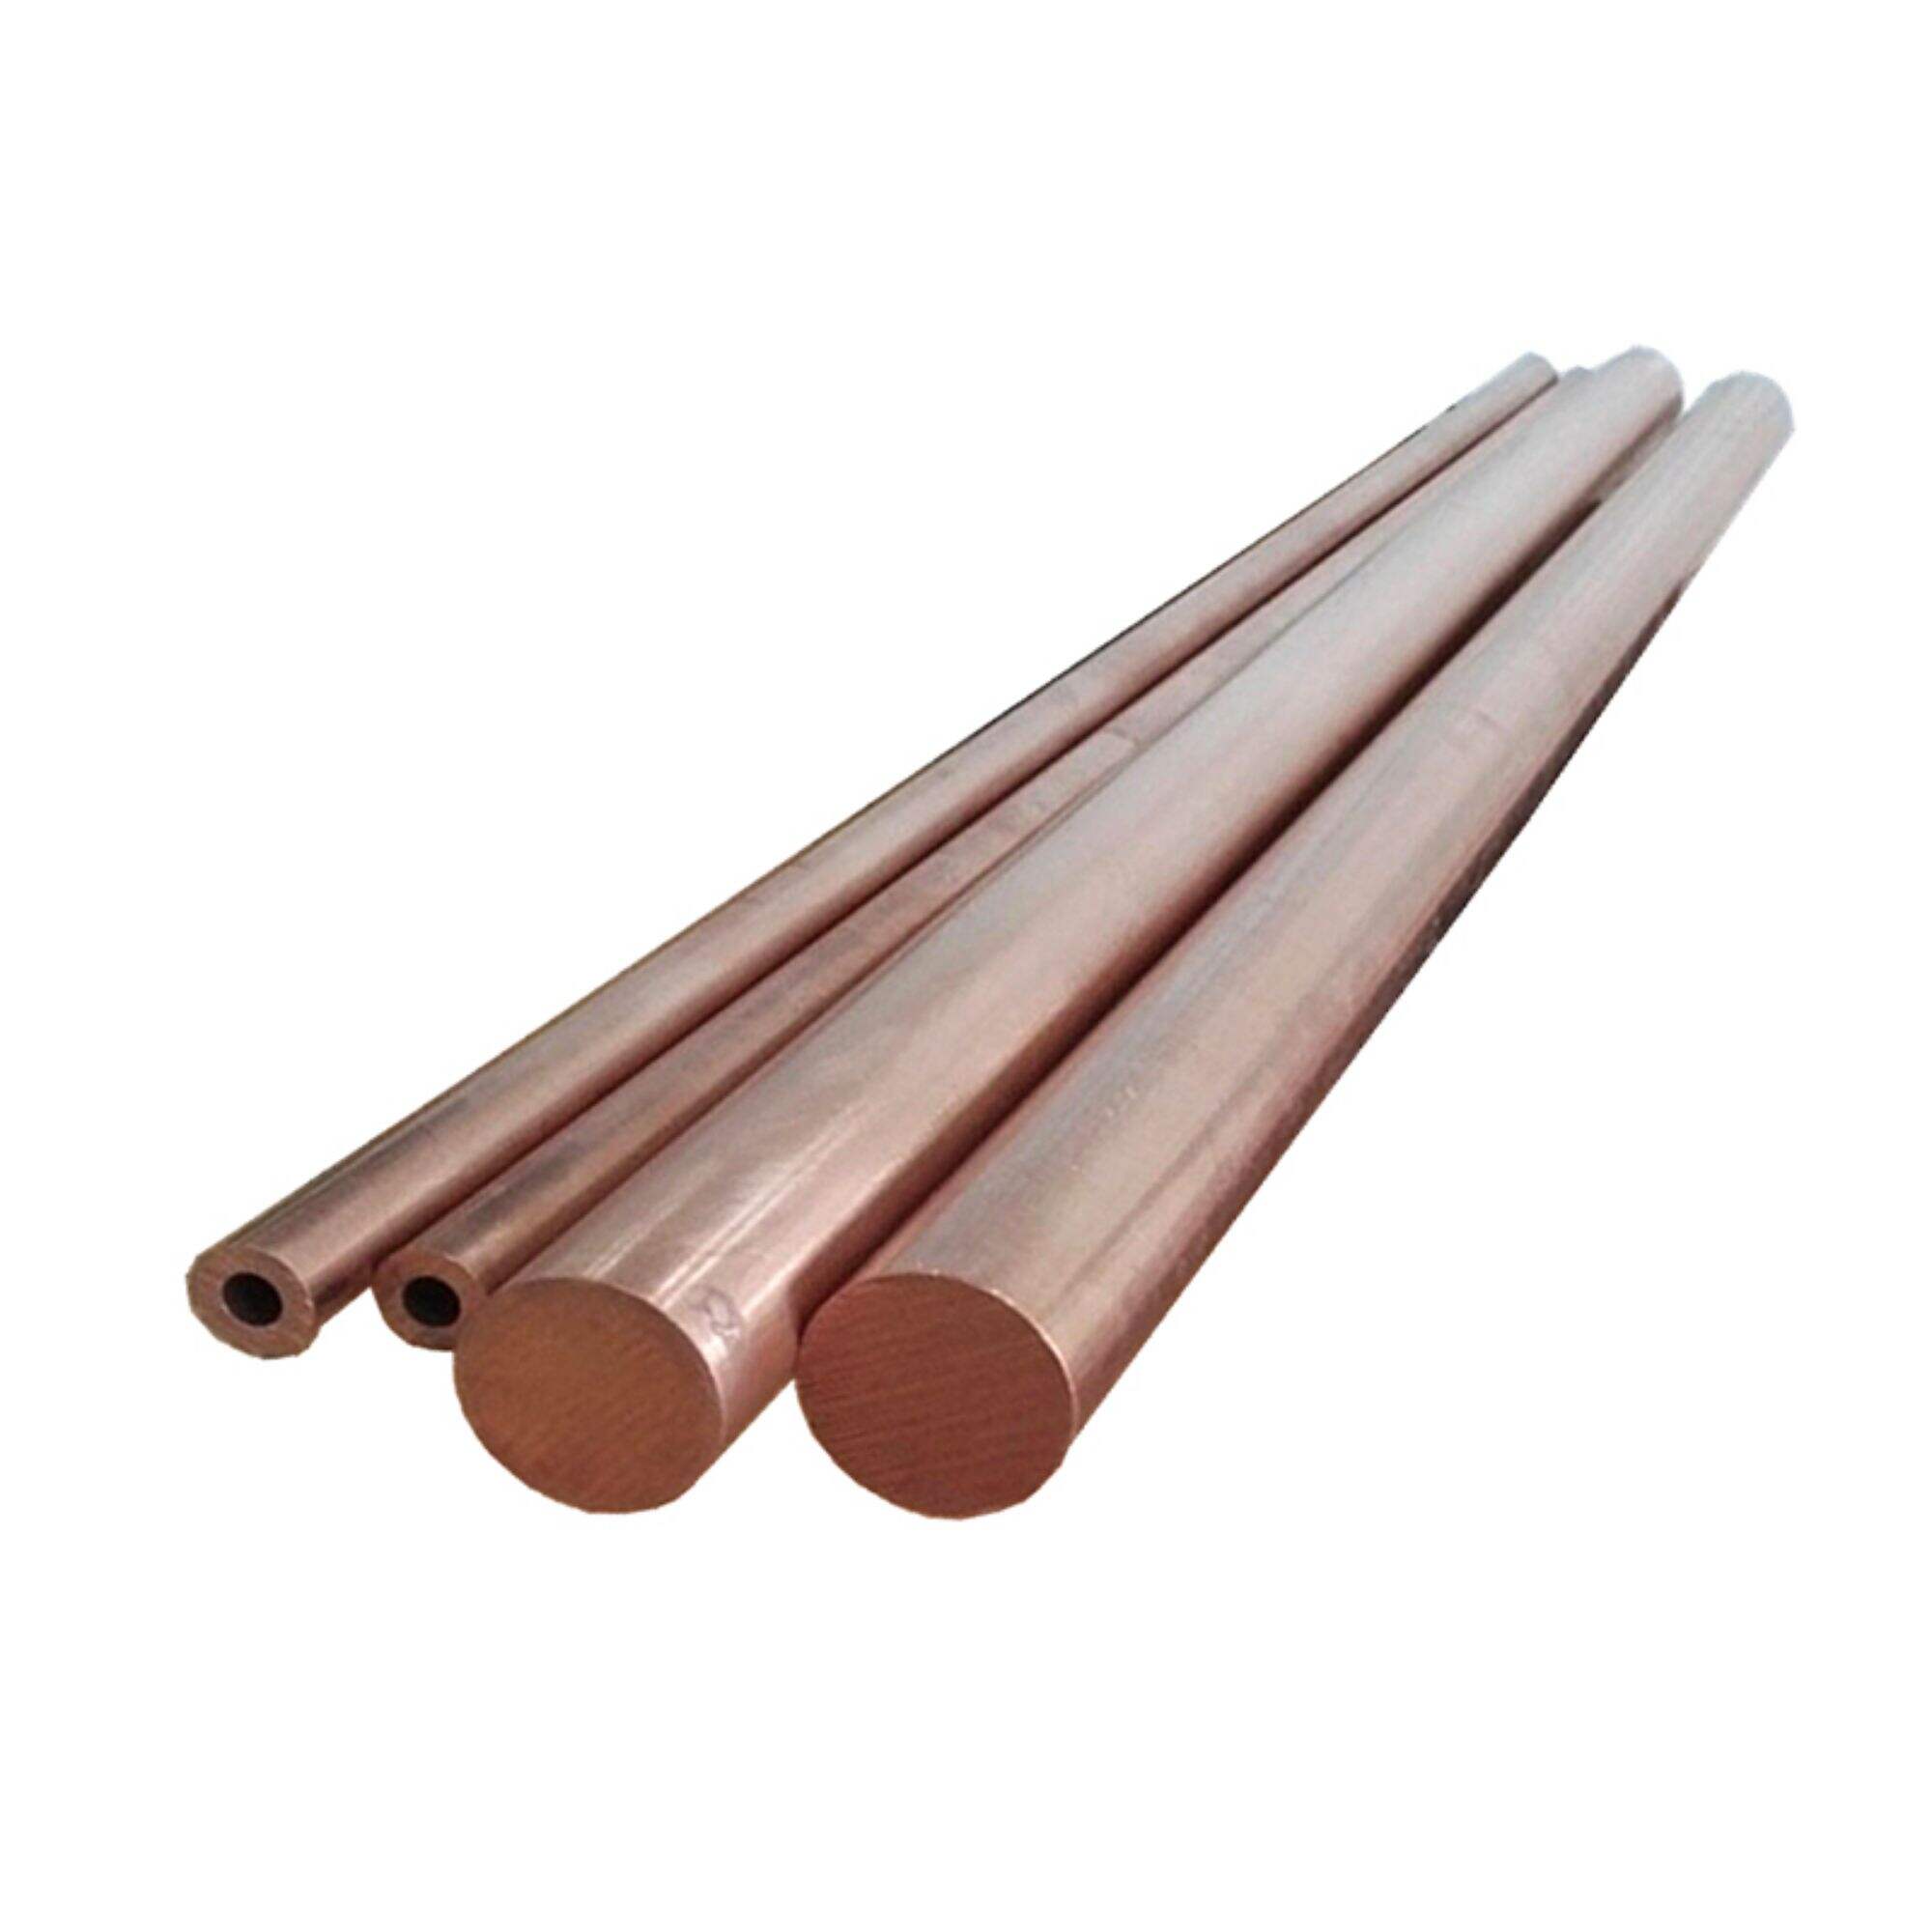 High quality 1mm 2mm 3mm copper rod c15100 c17200 c17300 beryllium copper bar